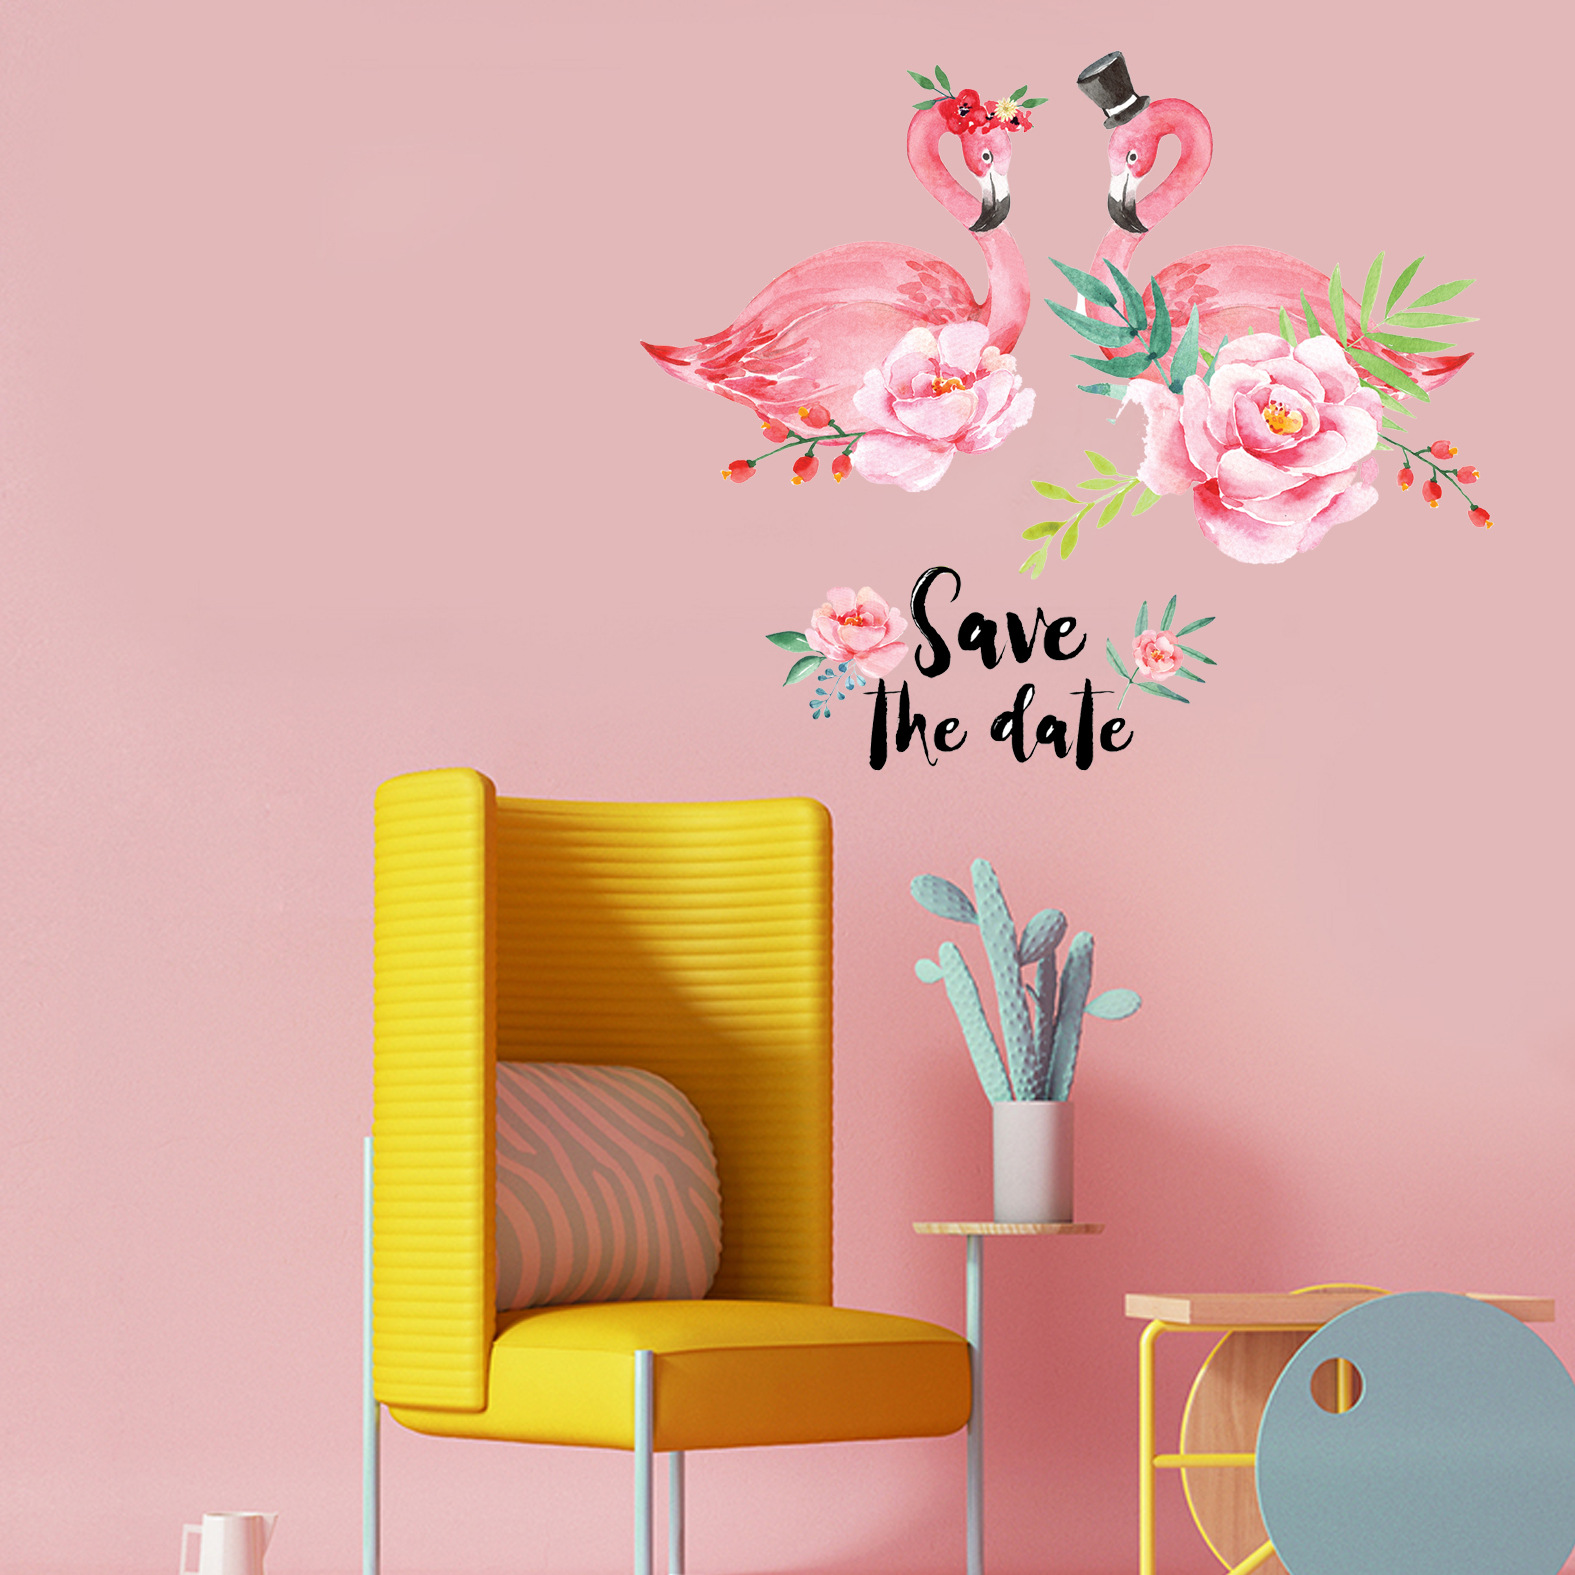 Miico-Creative-Pink-Love-Couple-Flamingo-Flower-PVC-Removable-Home-Room-Decorative-Decor-Sticker-1300666-1